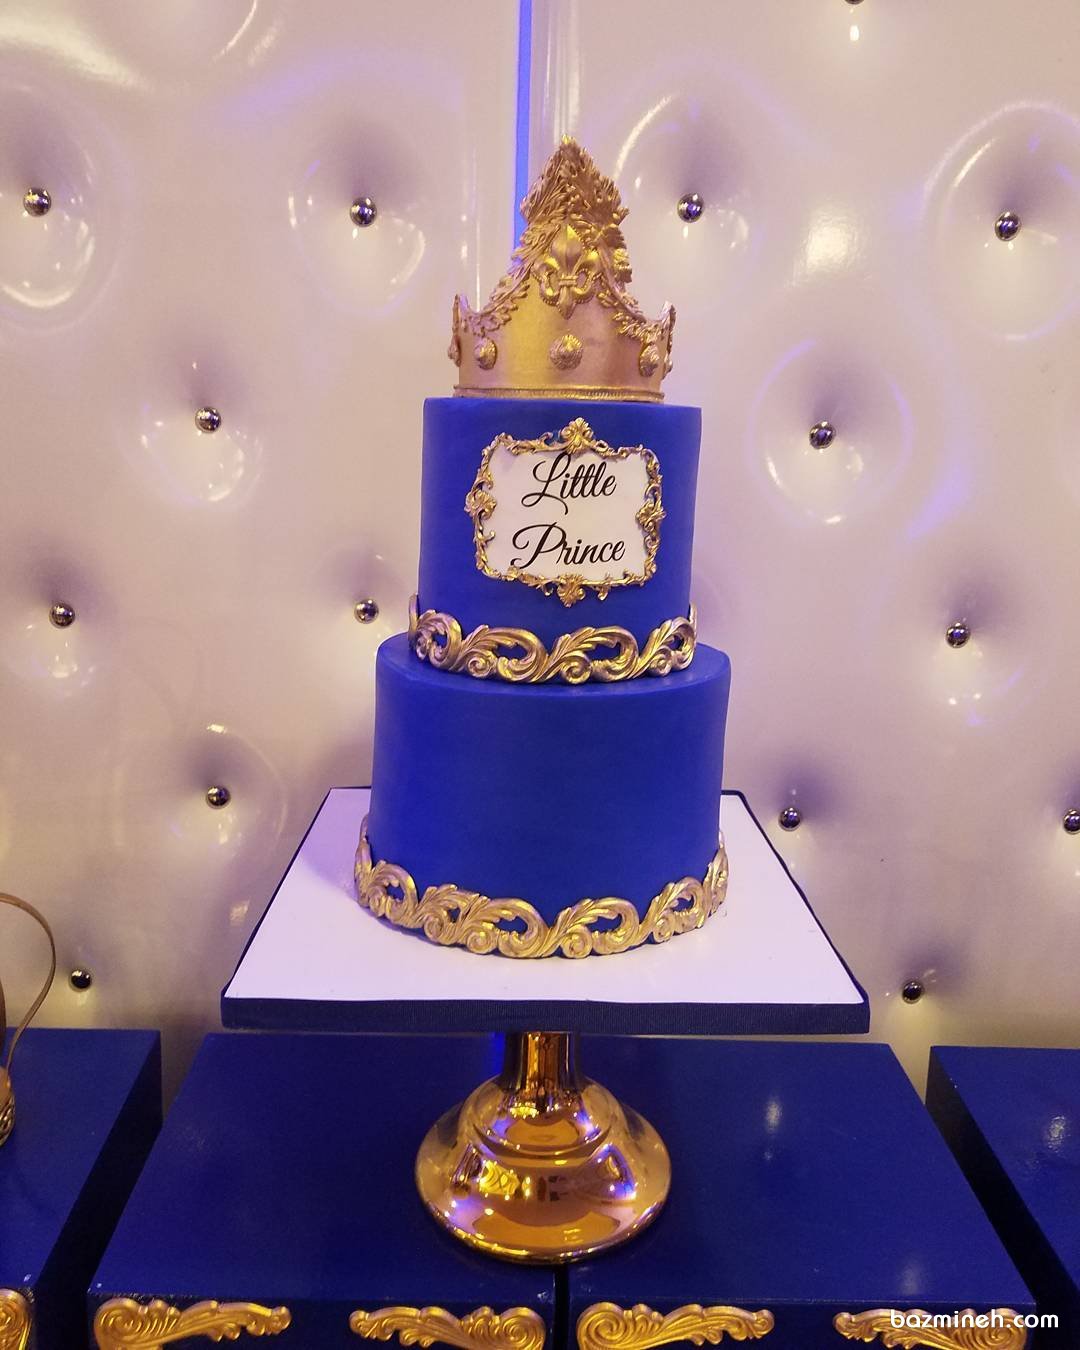 کیک دو طبقه جشن تولد پسرانه با تم پادشاه آبی طلایی (king)